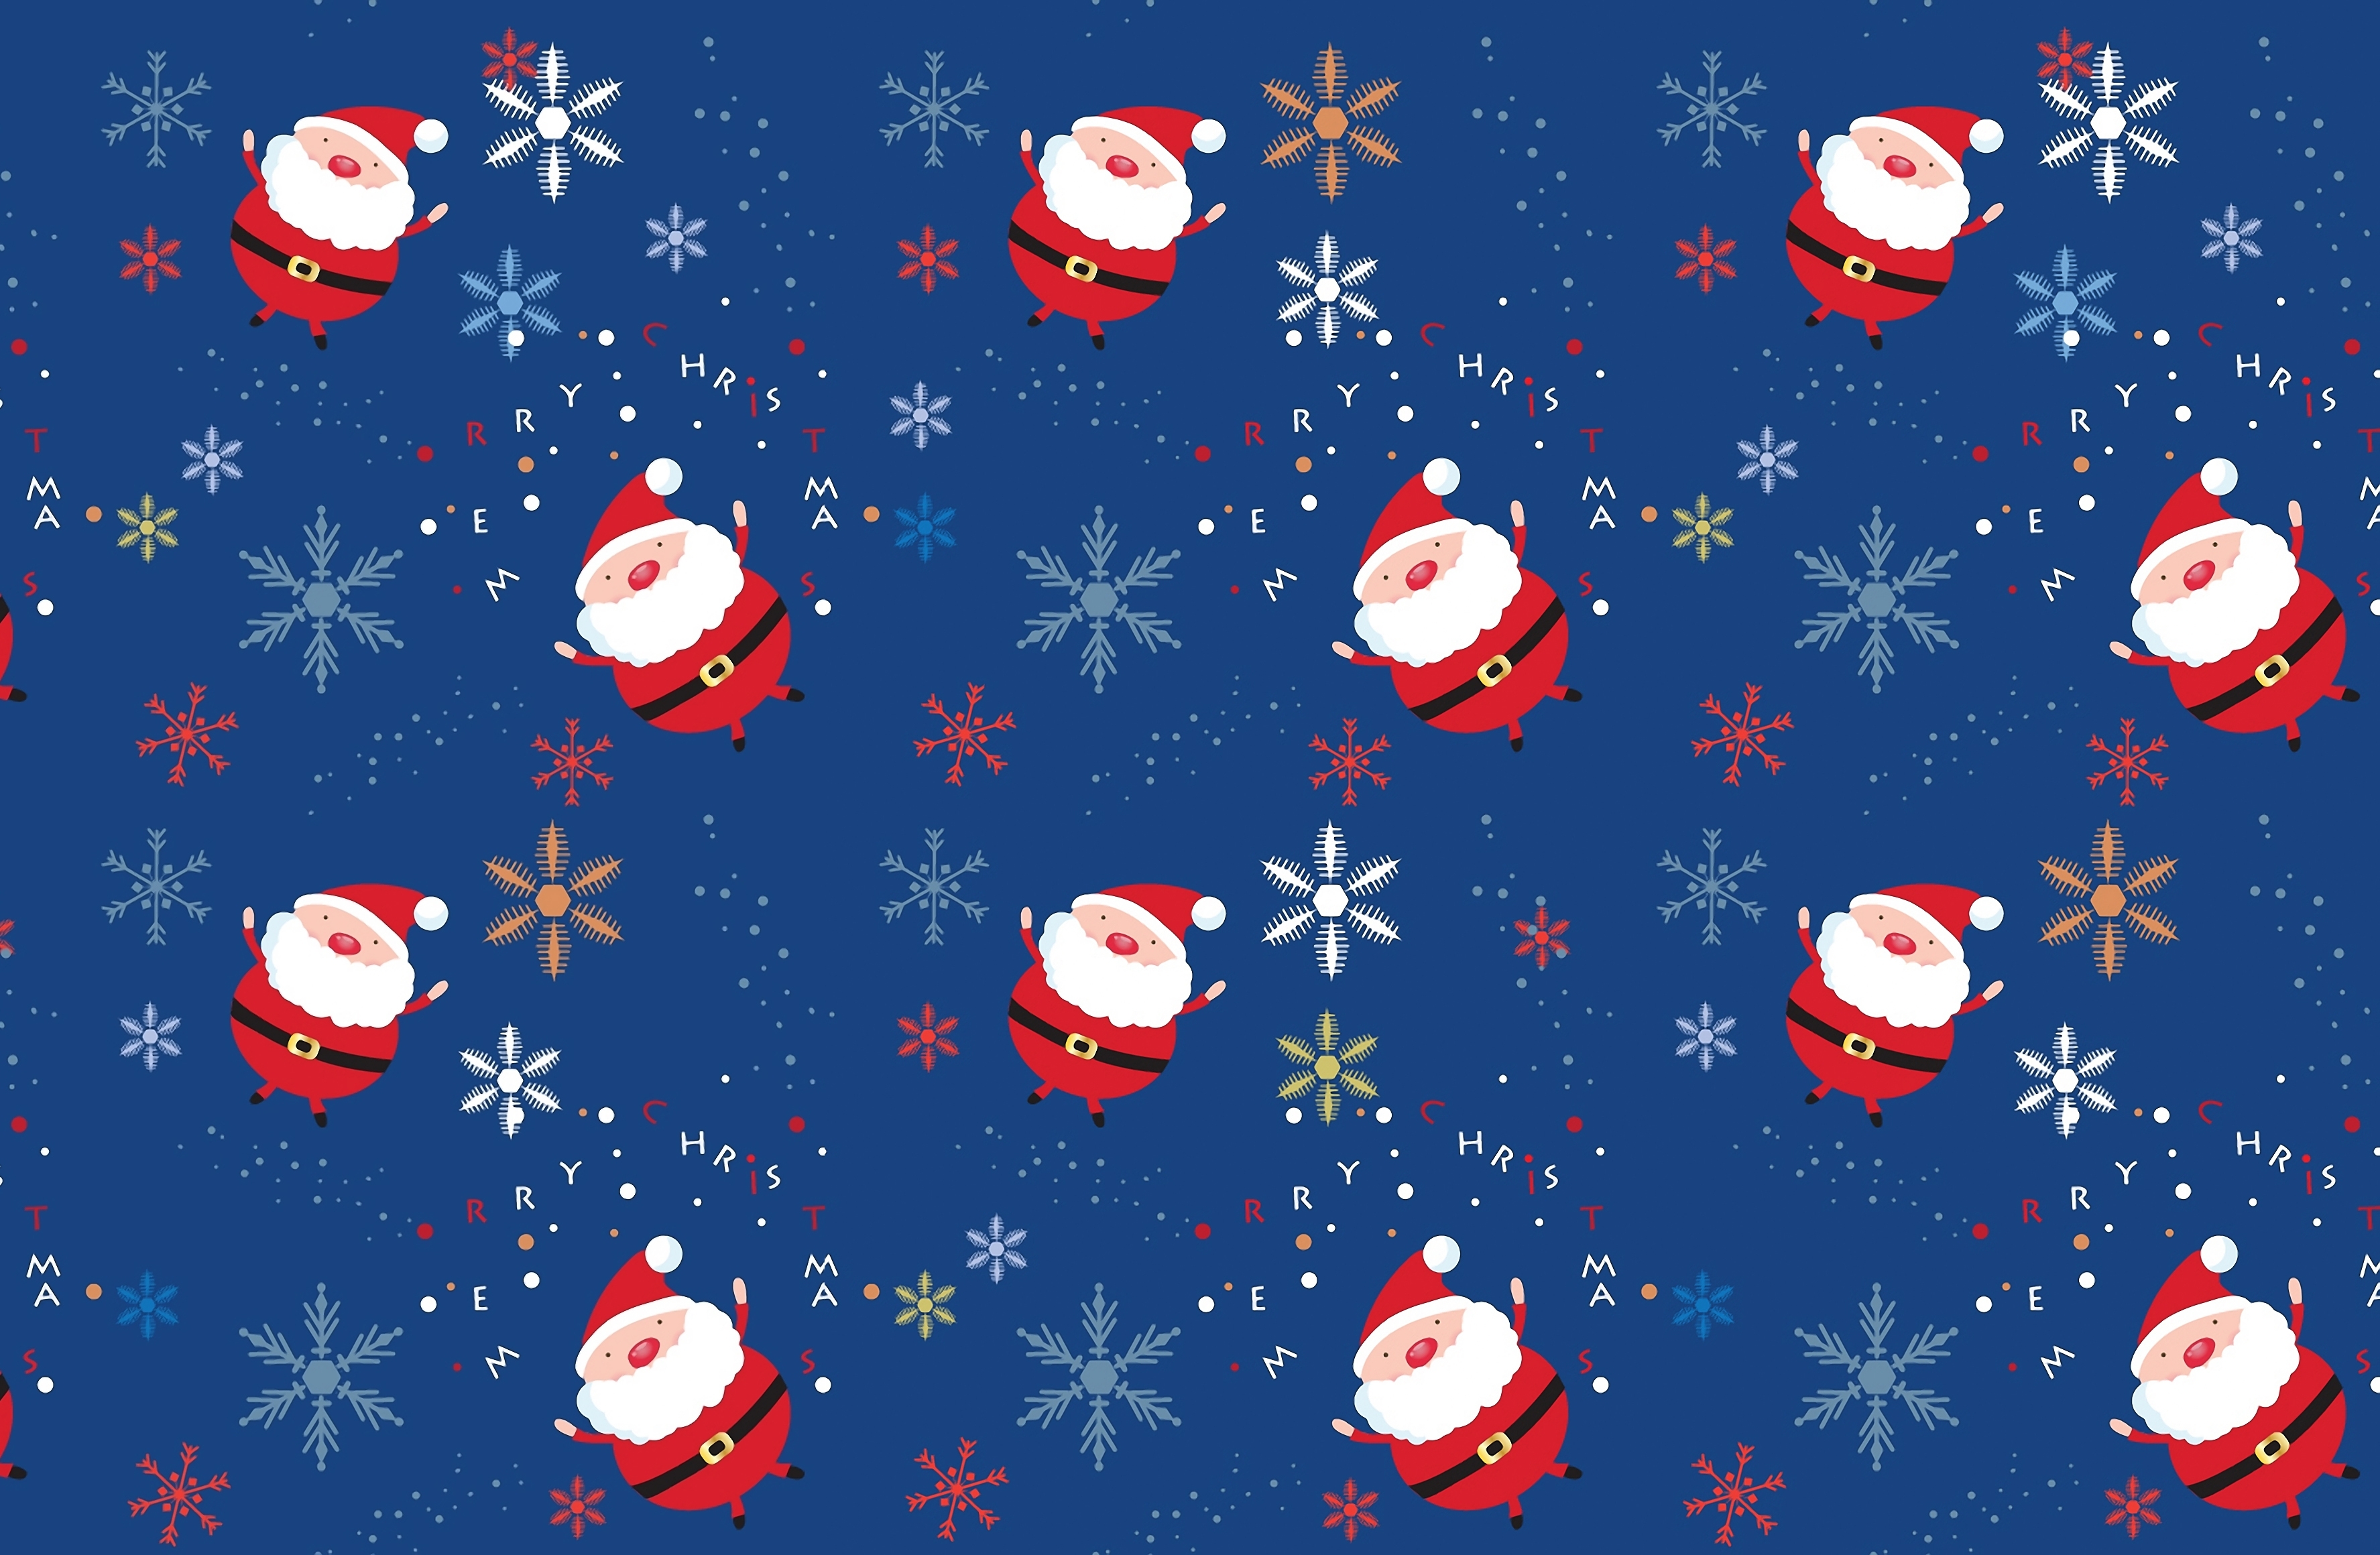 HD desktop wallpaper Christmas Holiday Santa download free picture  729809